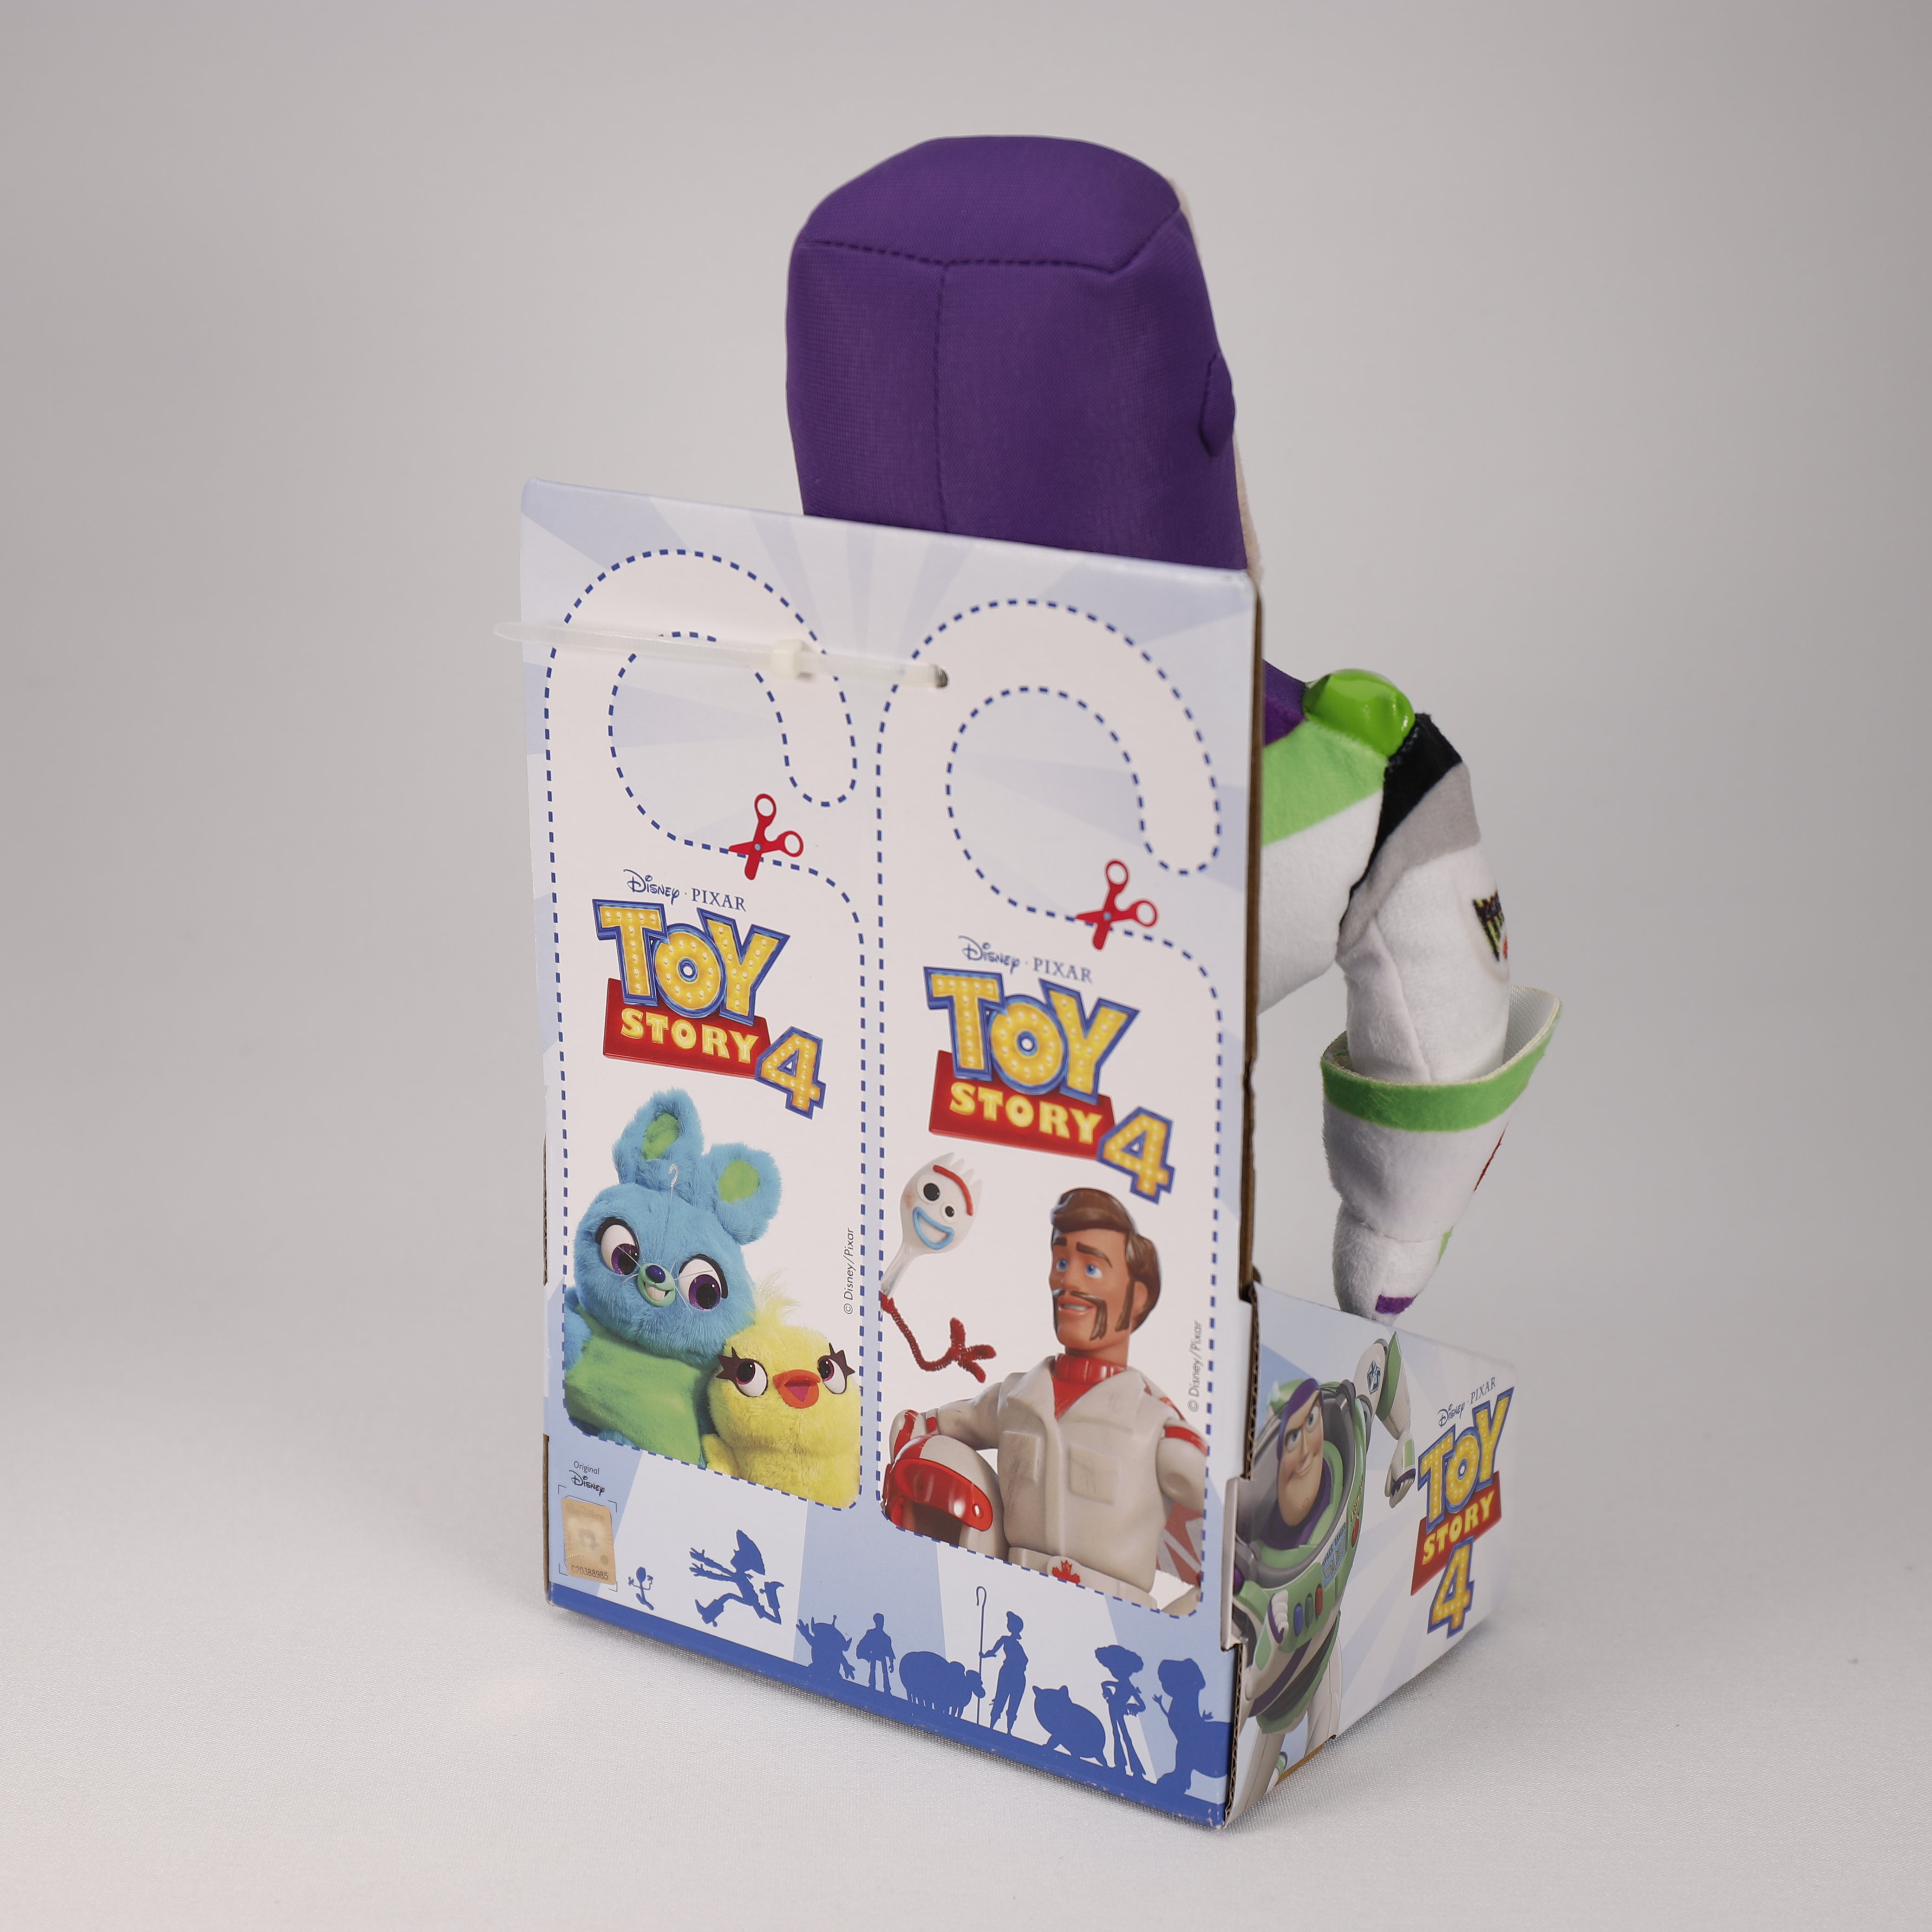 Disney Toy Story 4 Plush Buzz Action 25 cm, Polyester, Plüschtier, TOP Spielzeug